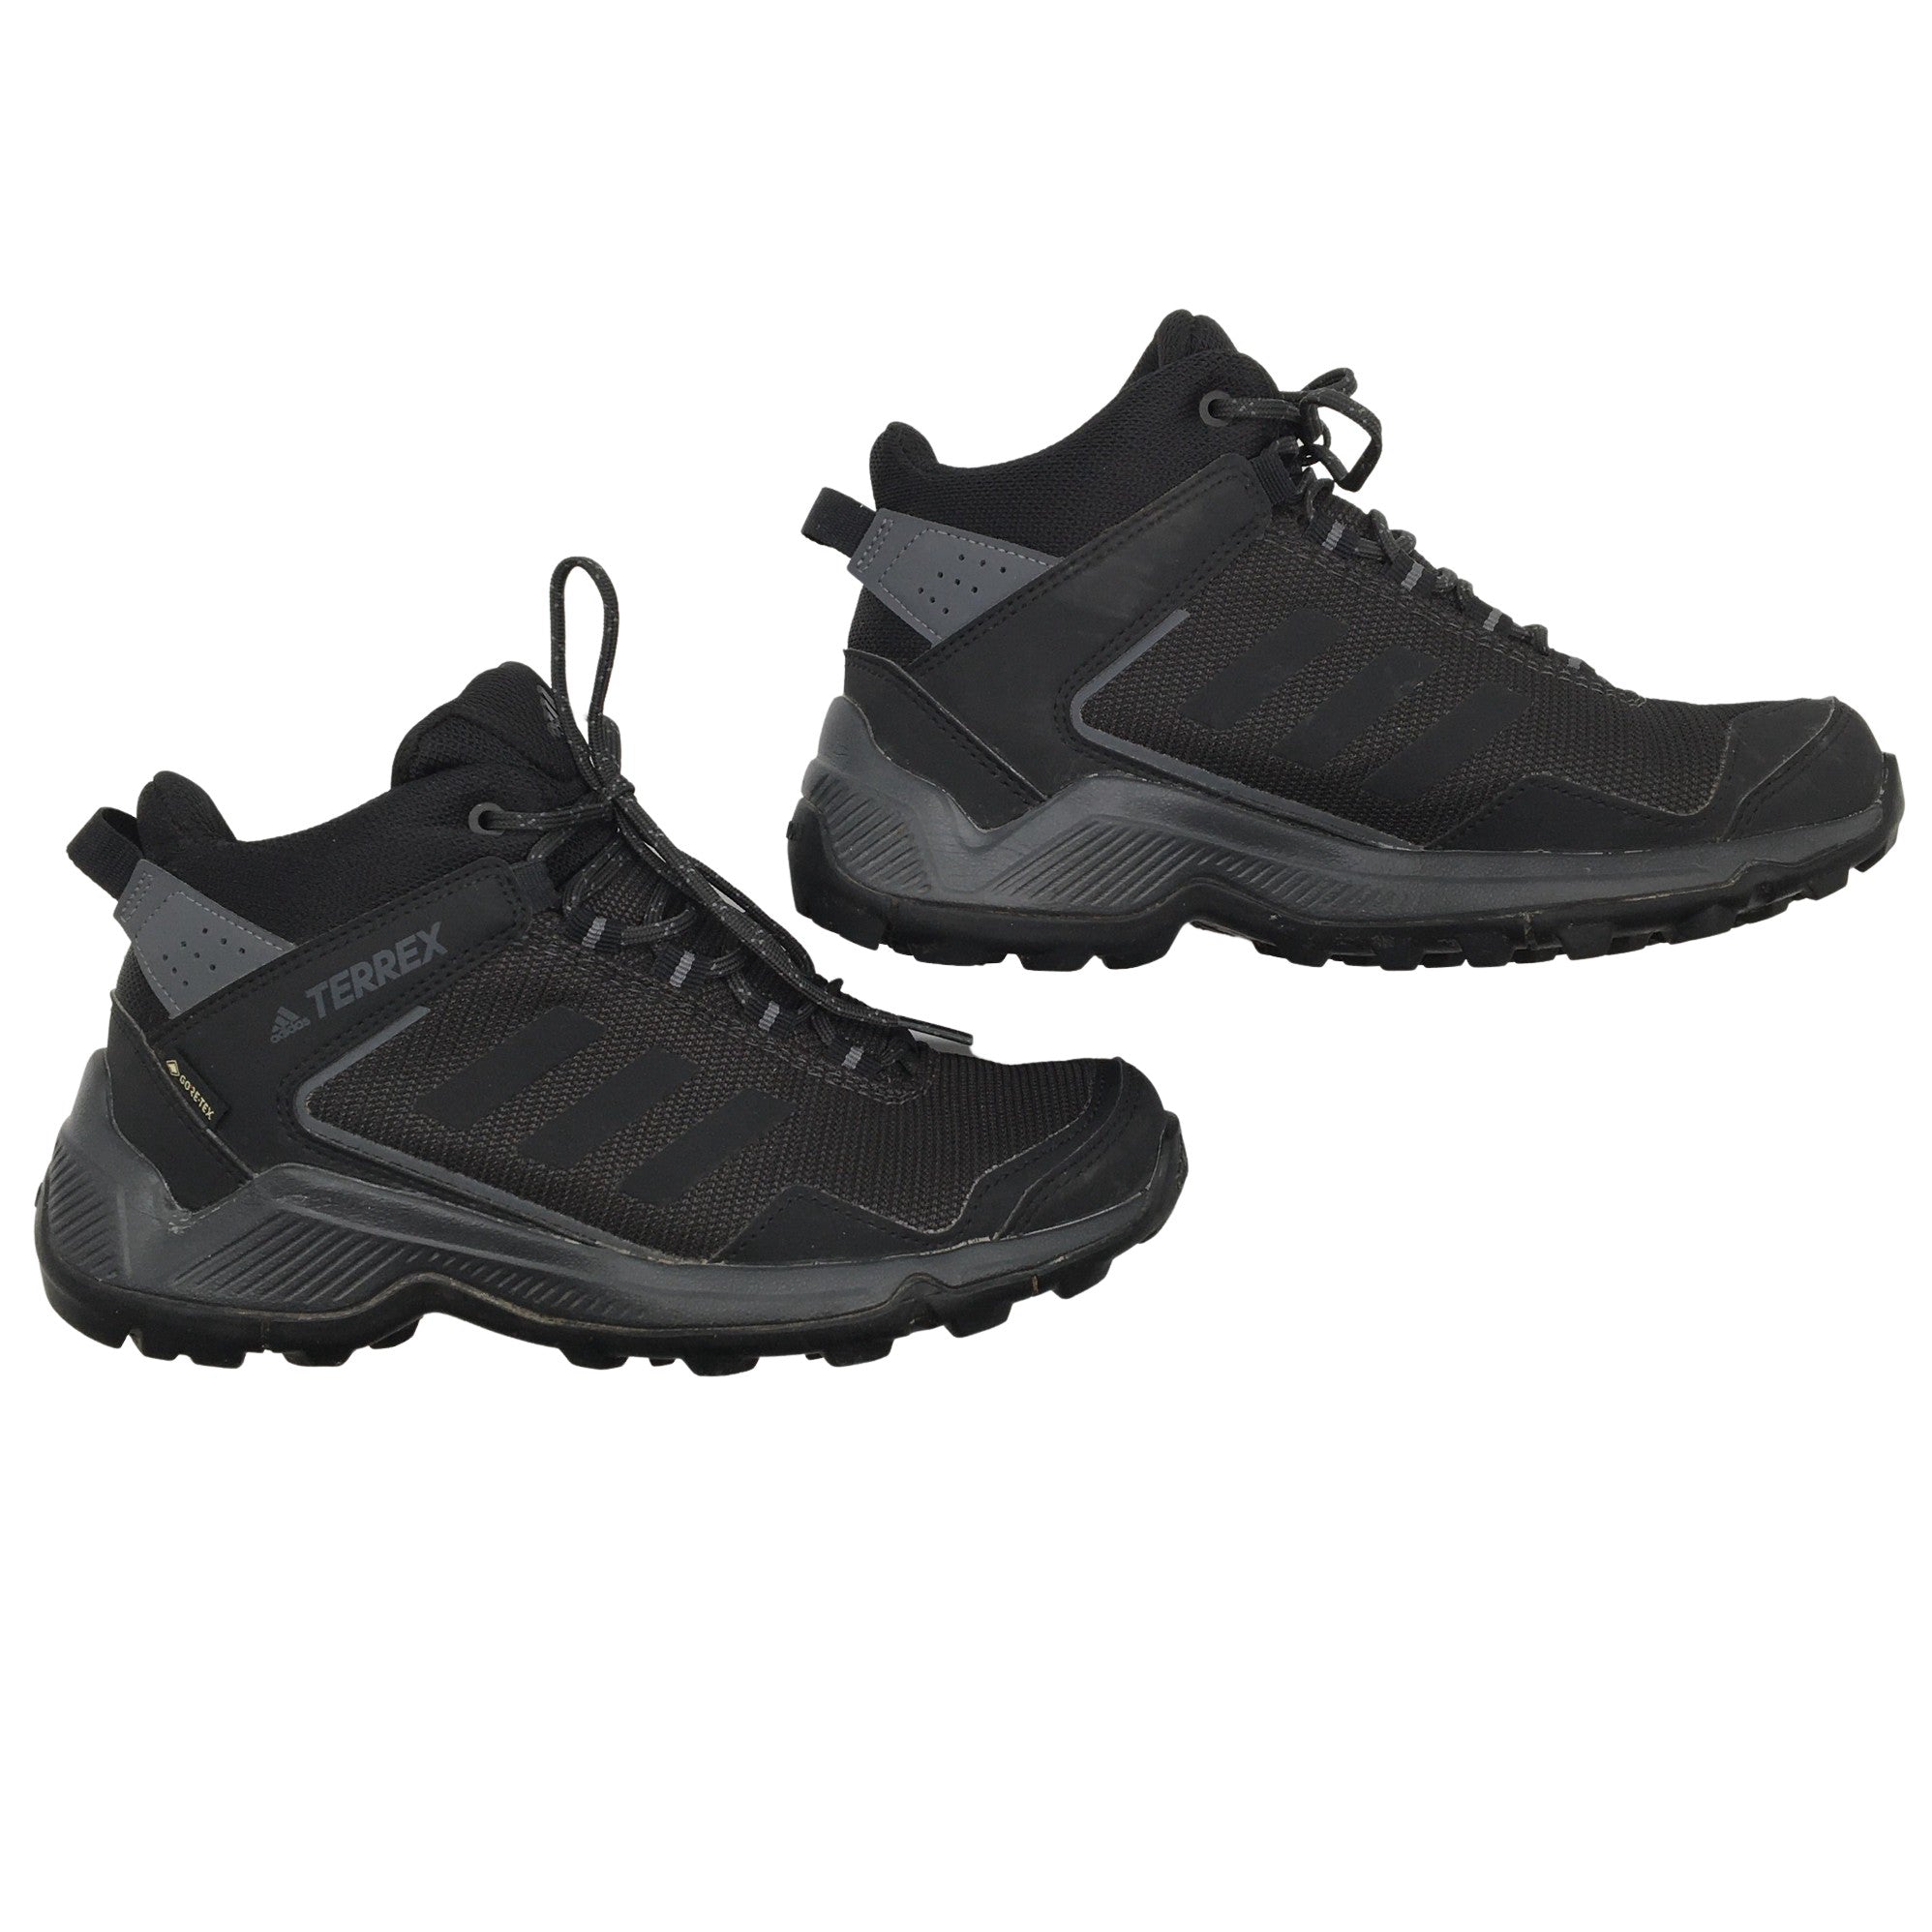 Adidas Outdoor size 38 (Black) |